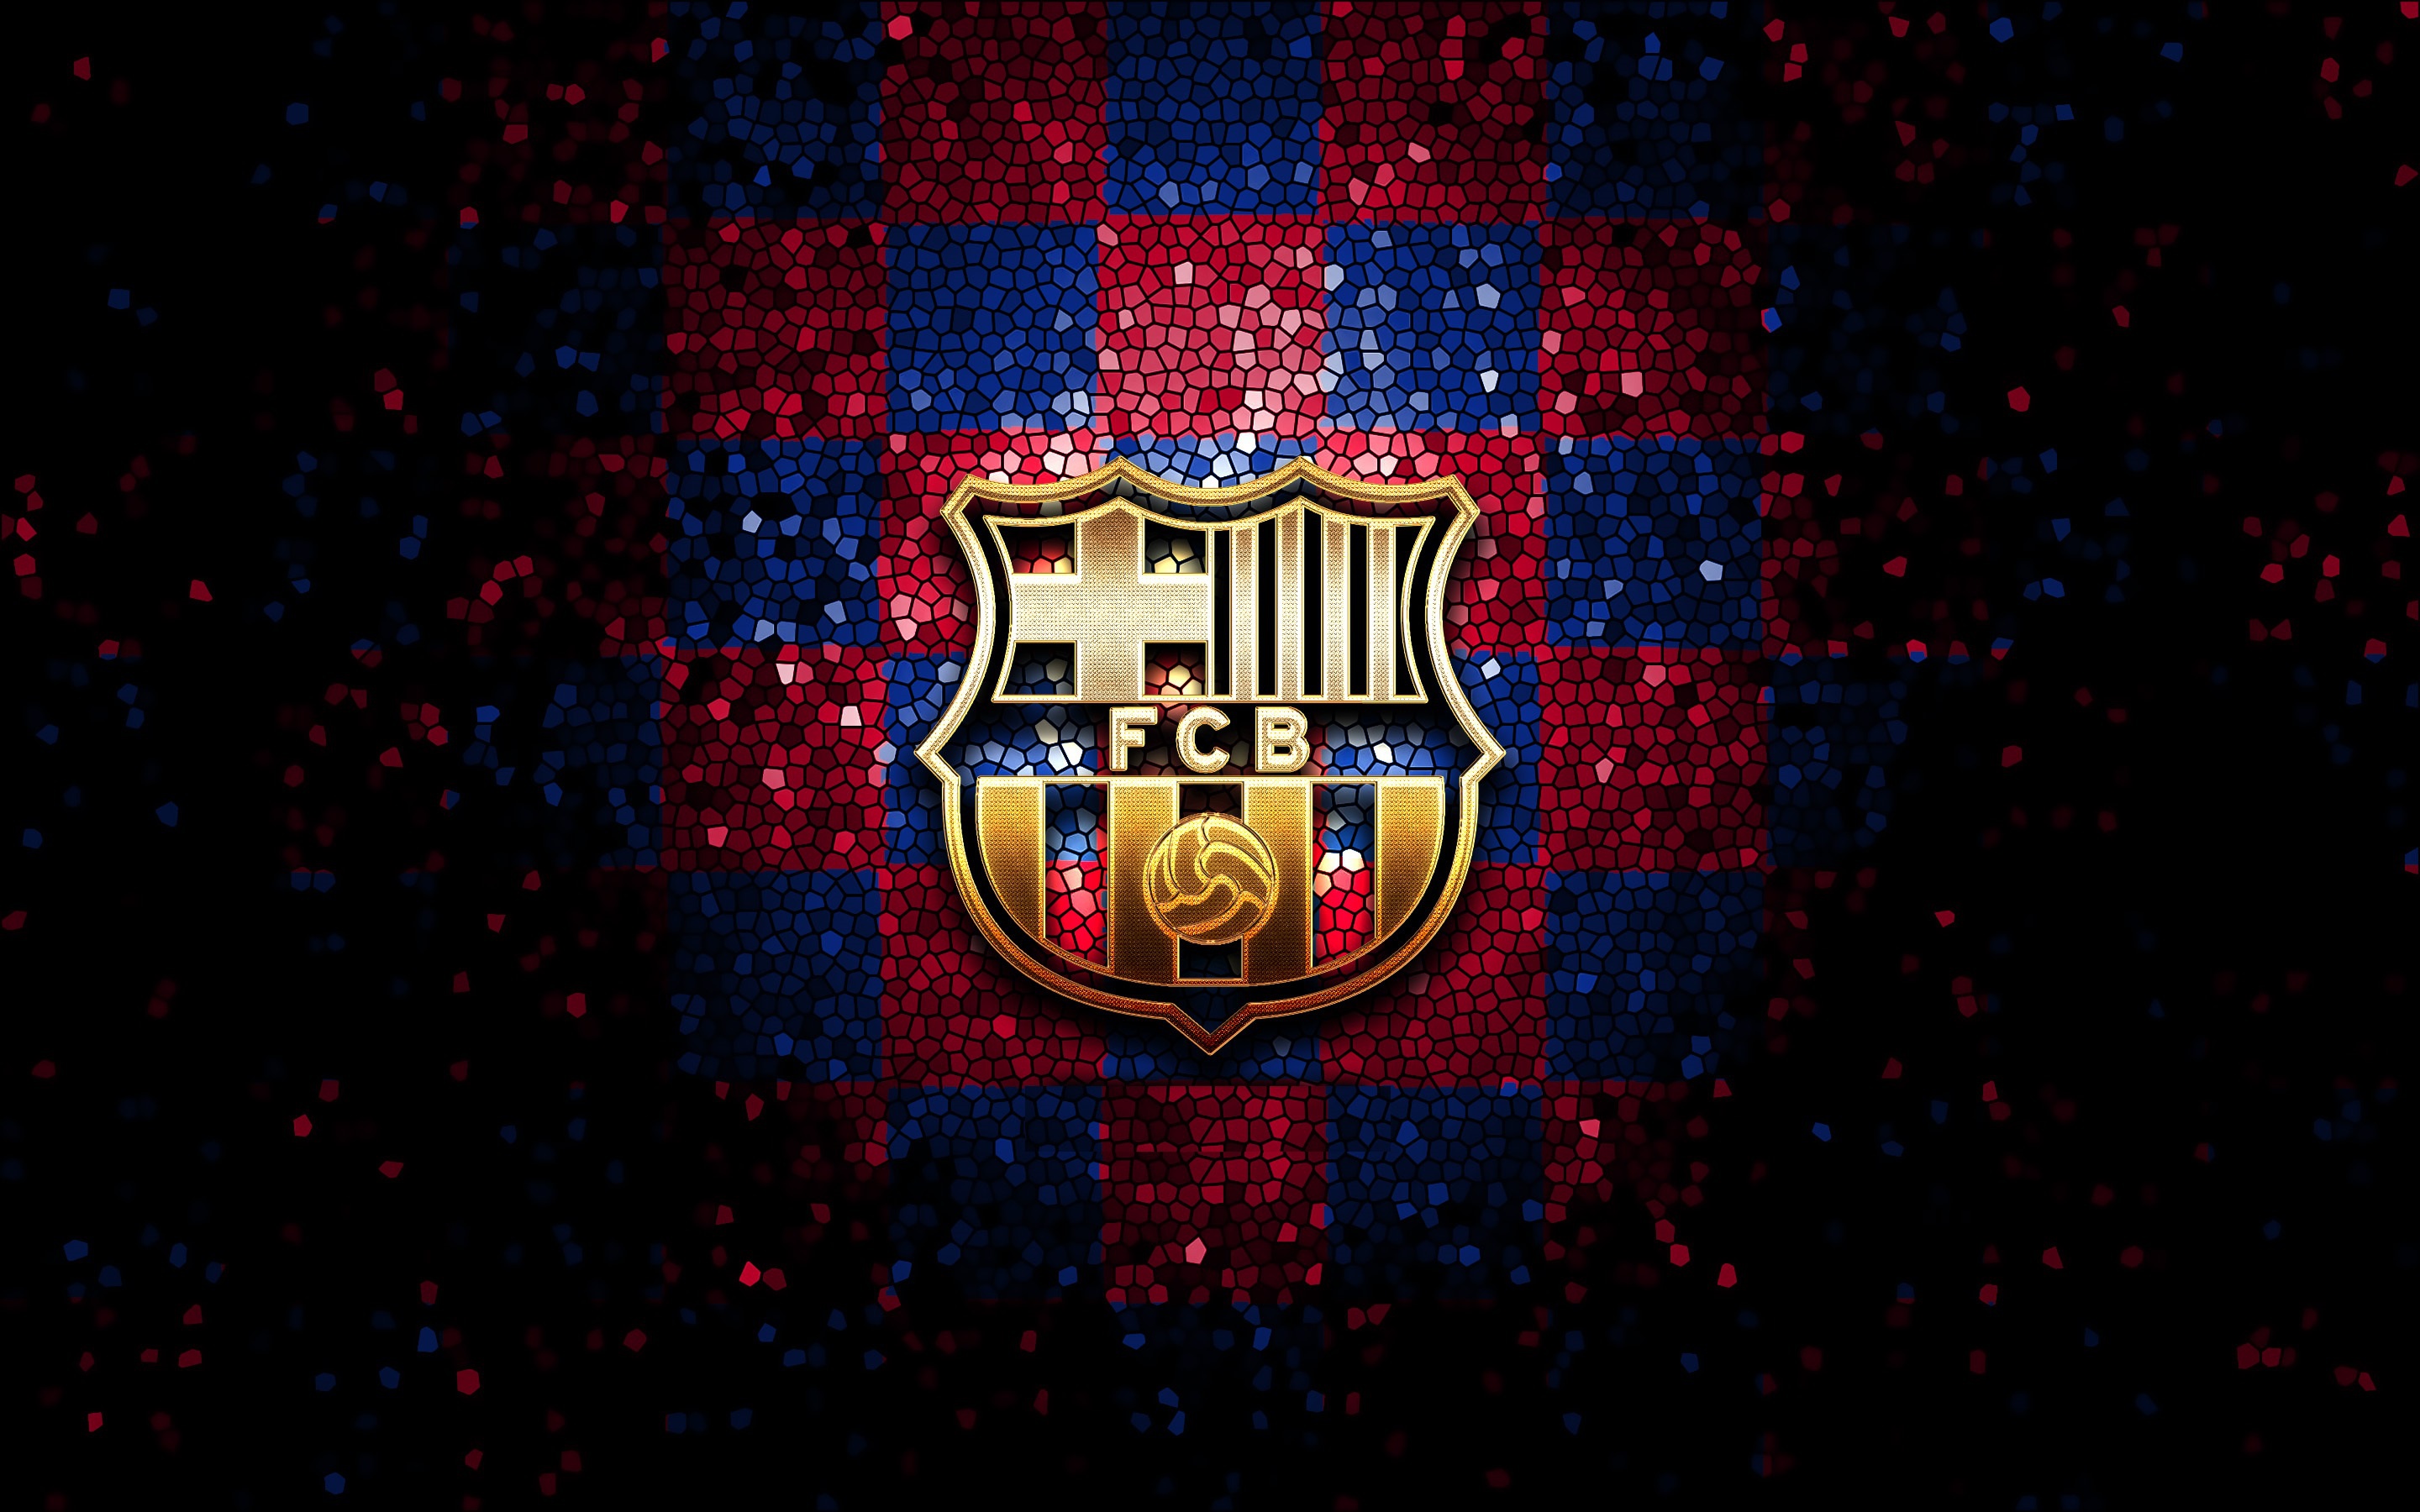 FC Barcelona | HD wallpapers 1920x1080, 4K UHD 3840x2160 desktop backgrounds,  football image, sports